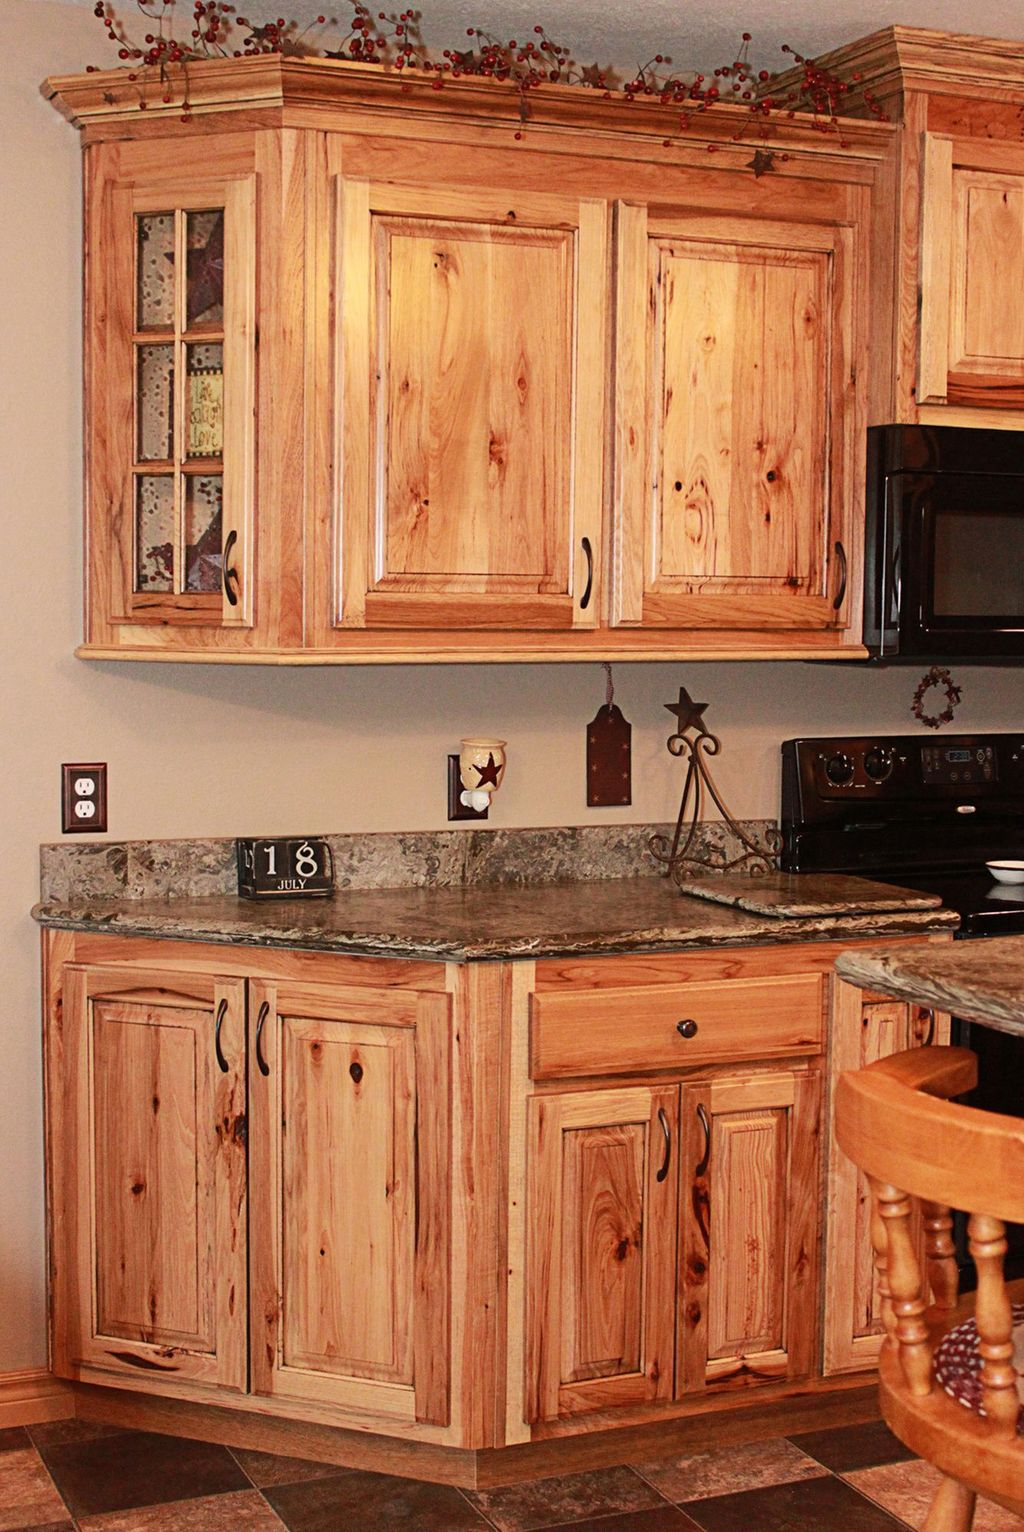 45 Amazing Wooden Kitchen Ideas Home Decor